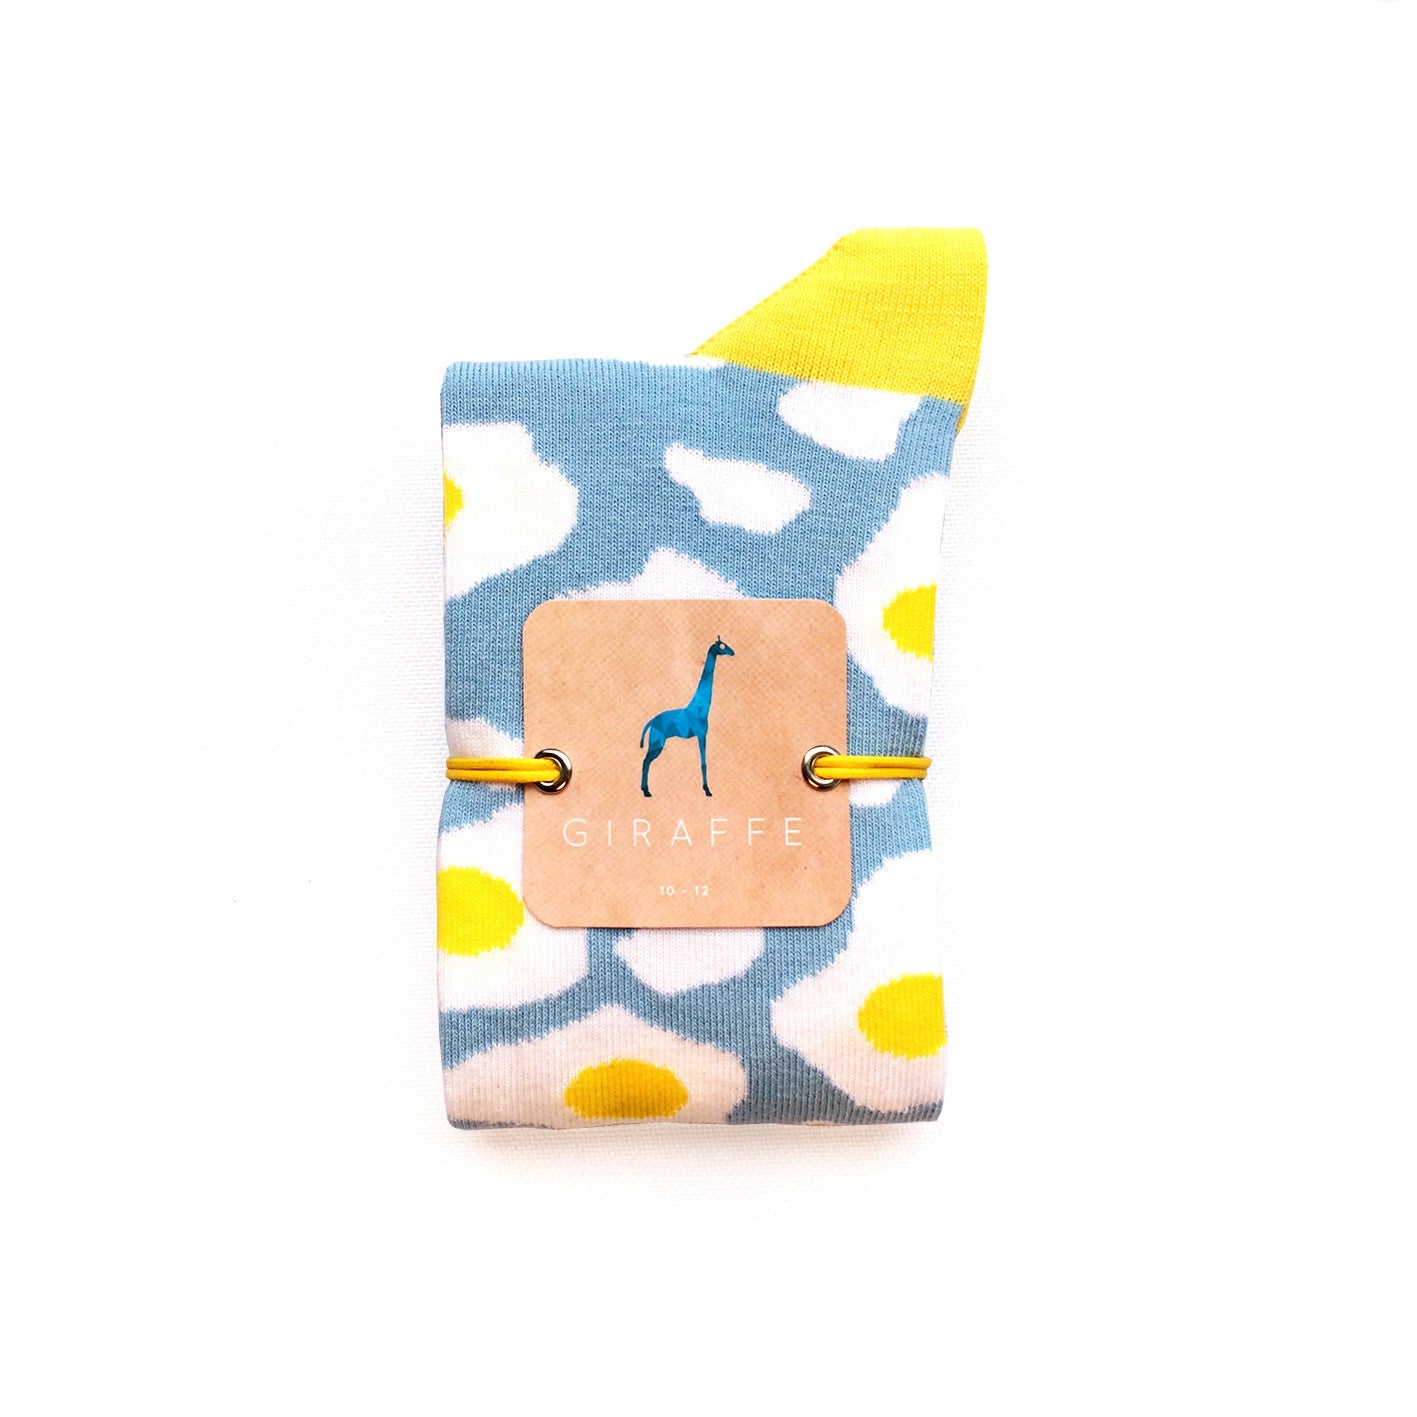 Giraffecool-Giraffe-Cool-Blue-Yellow-White-Clouds-And-Eggs-Brushed-Cotton-Fashion-Socks-Close